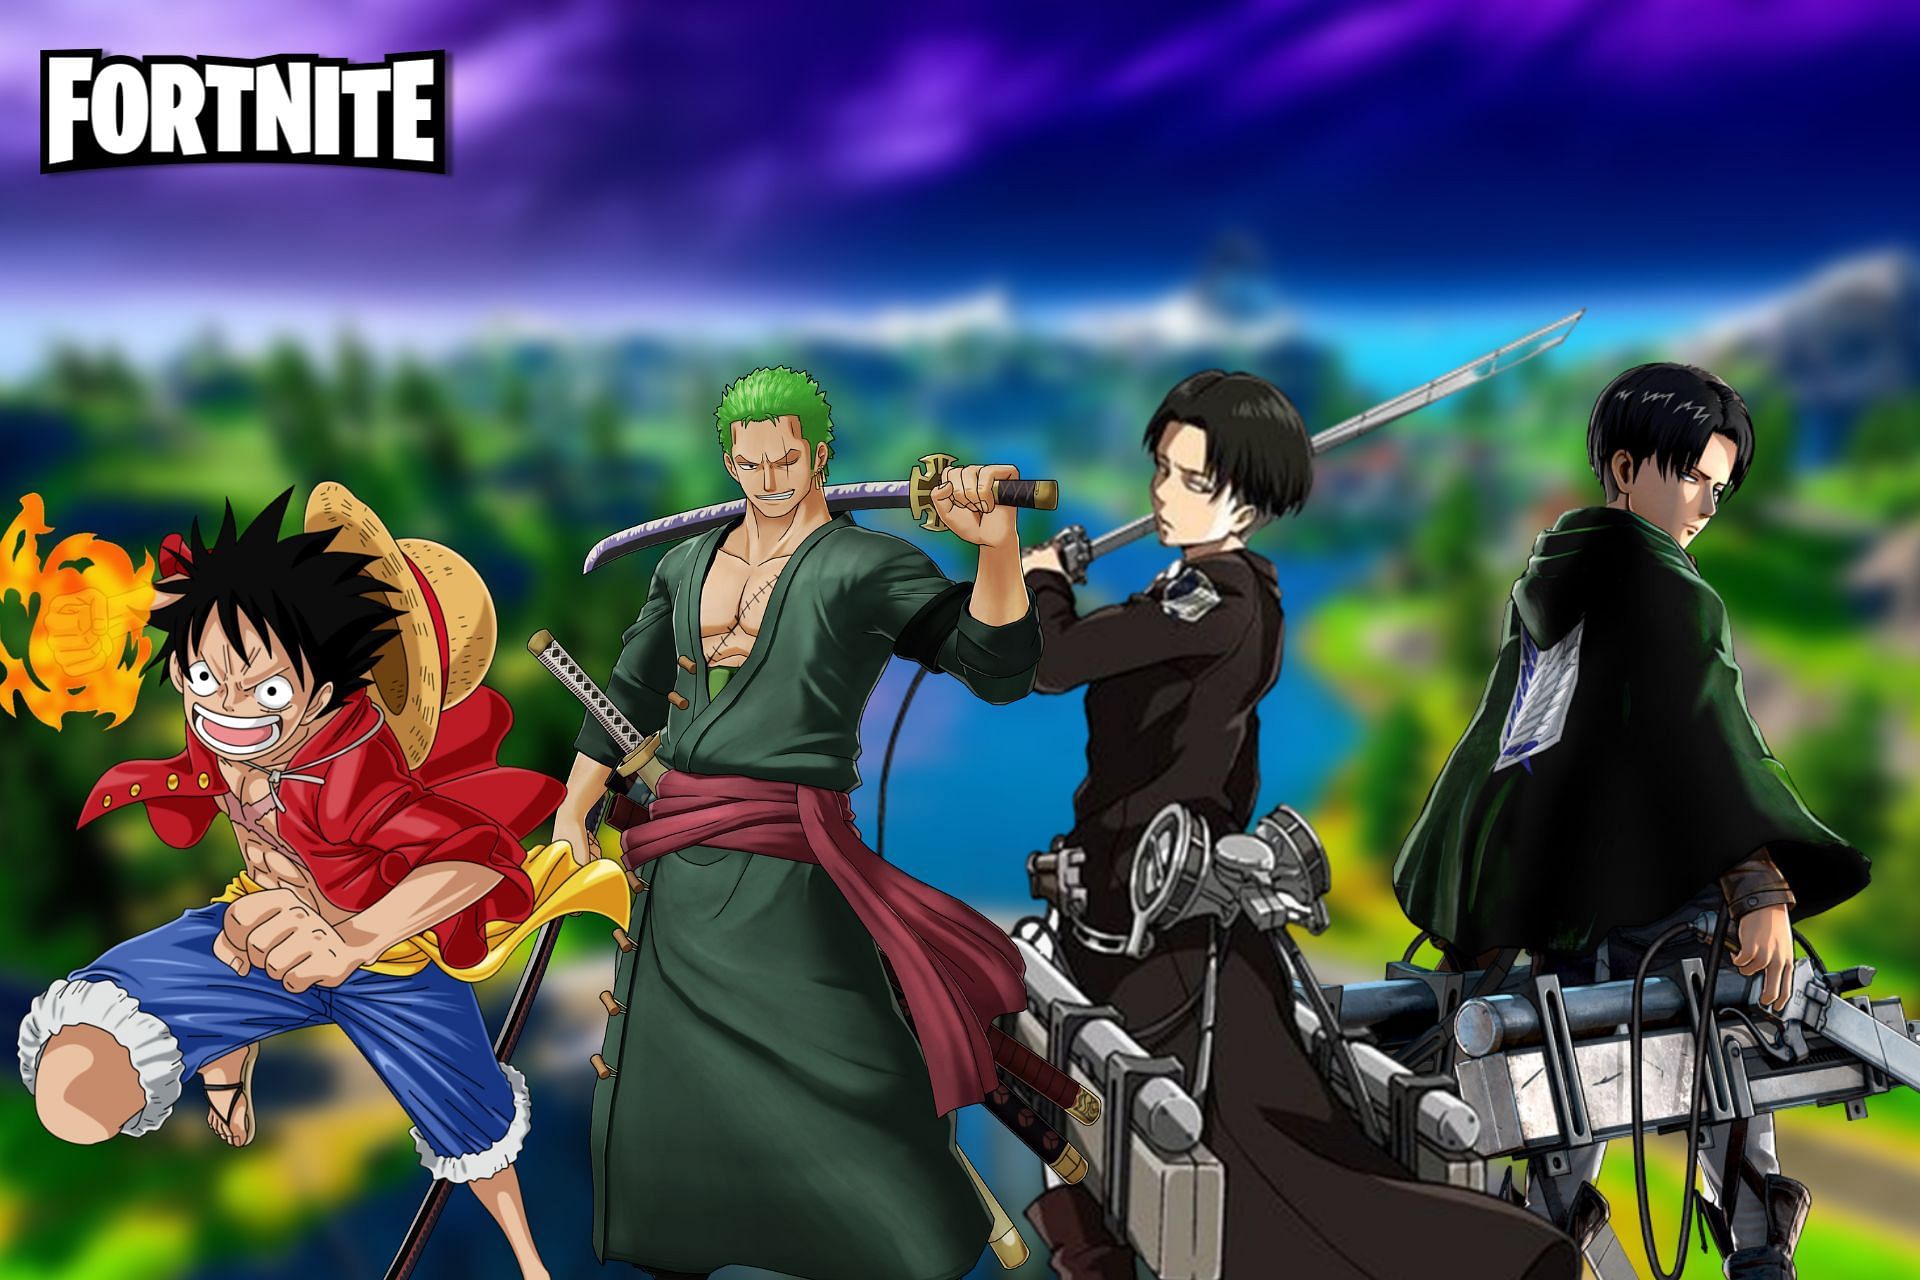 Anime characters that can arrive in Fortnite soon (Image via Sportskeeda)